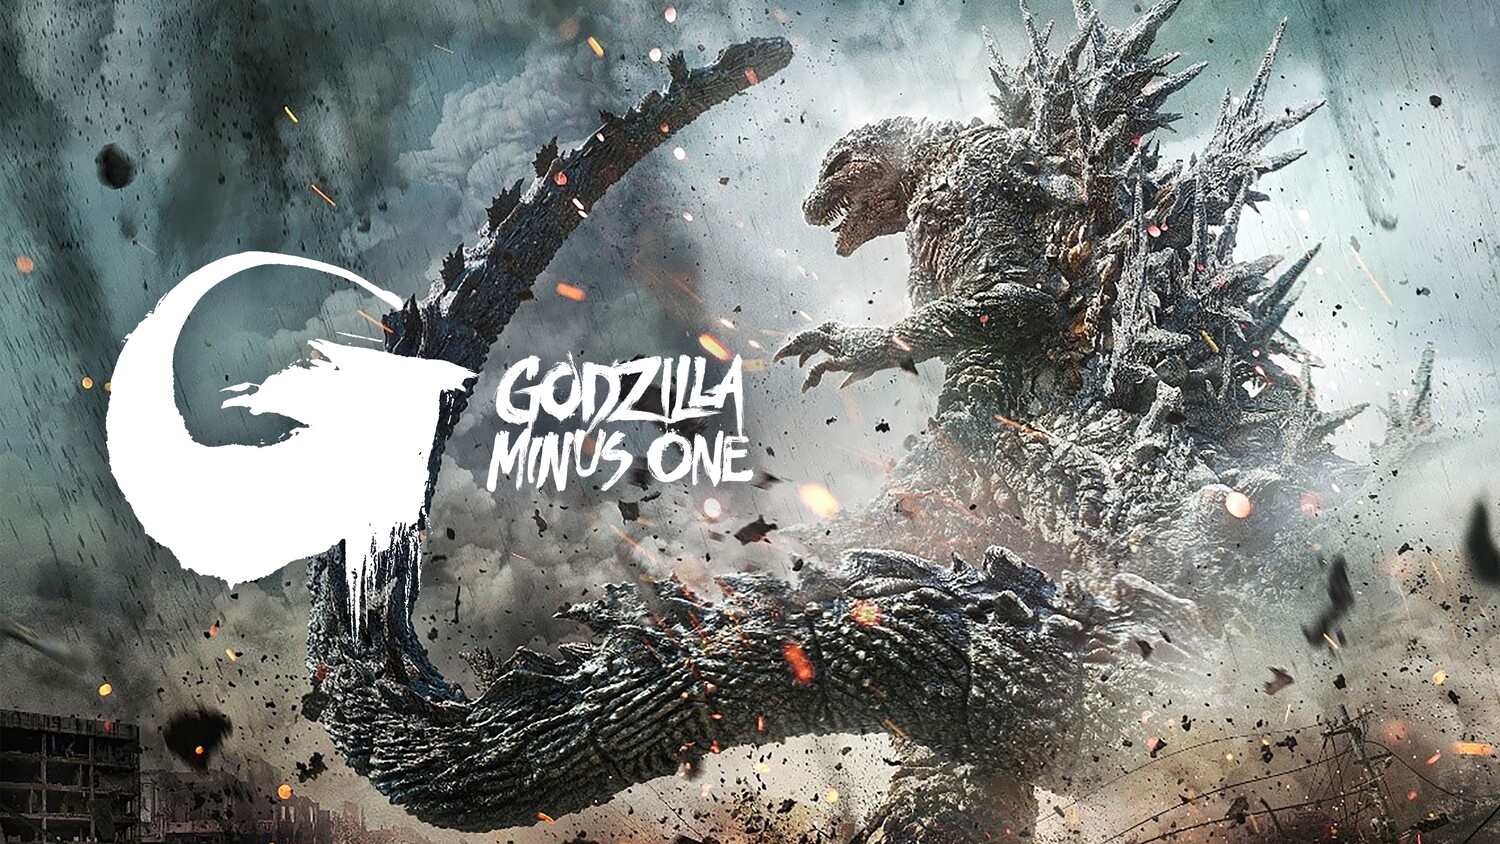 The movie Godzilla Minus One - Official trailer | Netflix